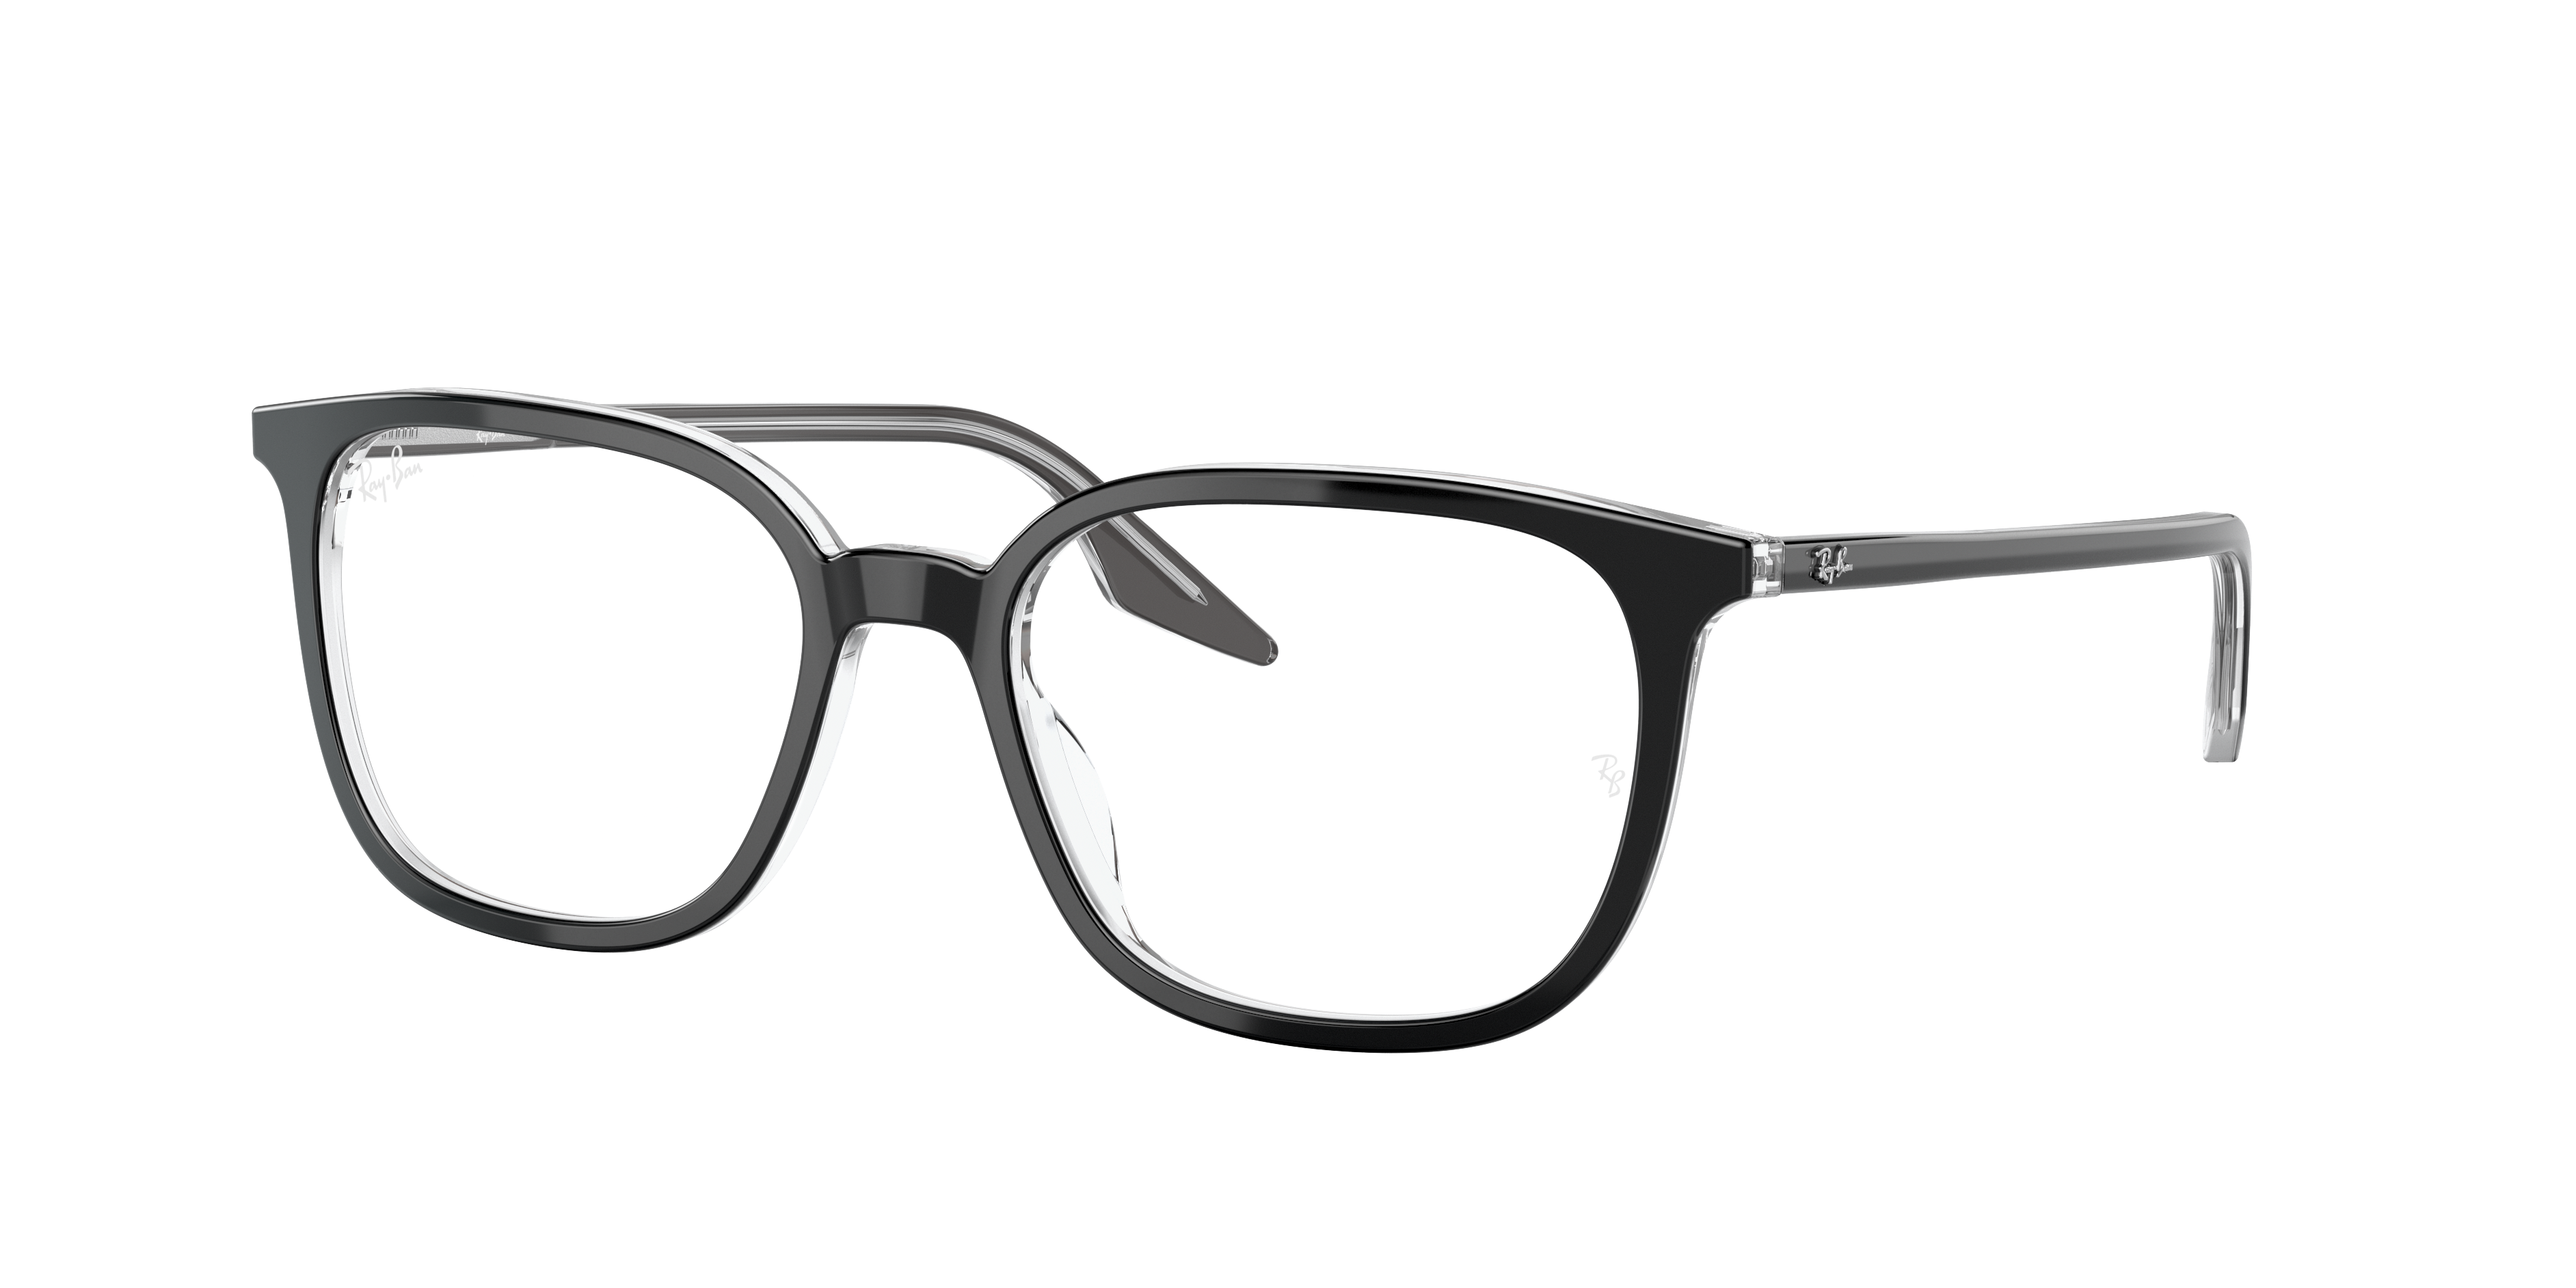 Rb5362 Optics Eyeglasses with Black On Transparent Frame | Ray-Ban®